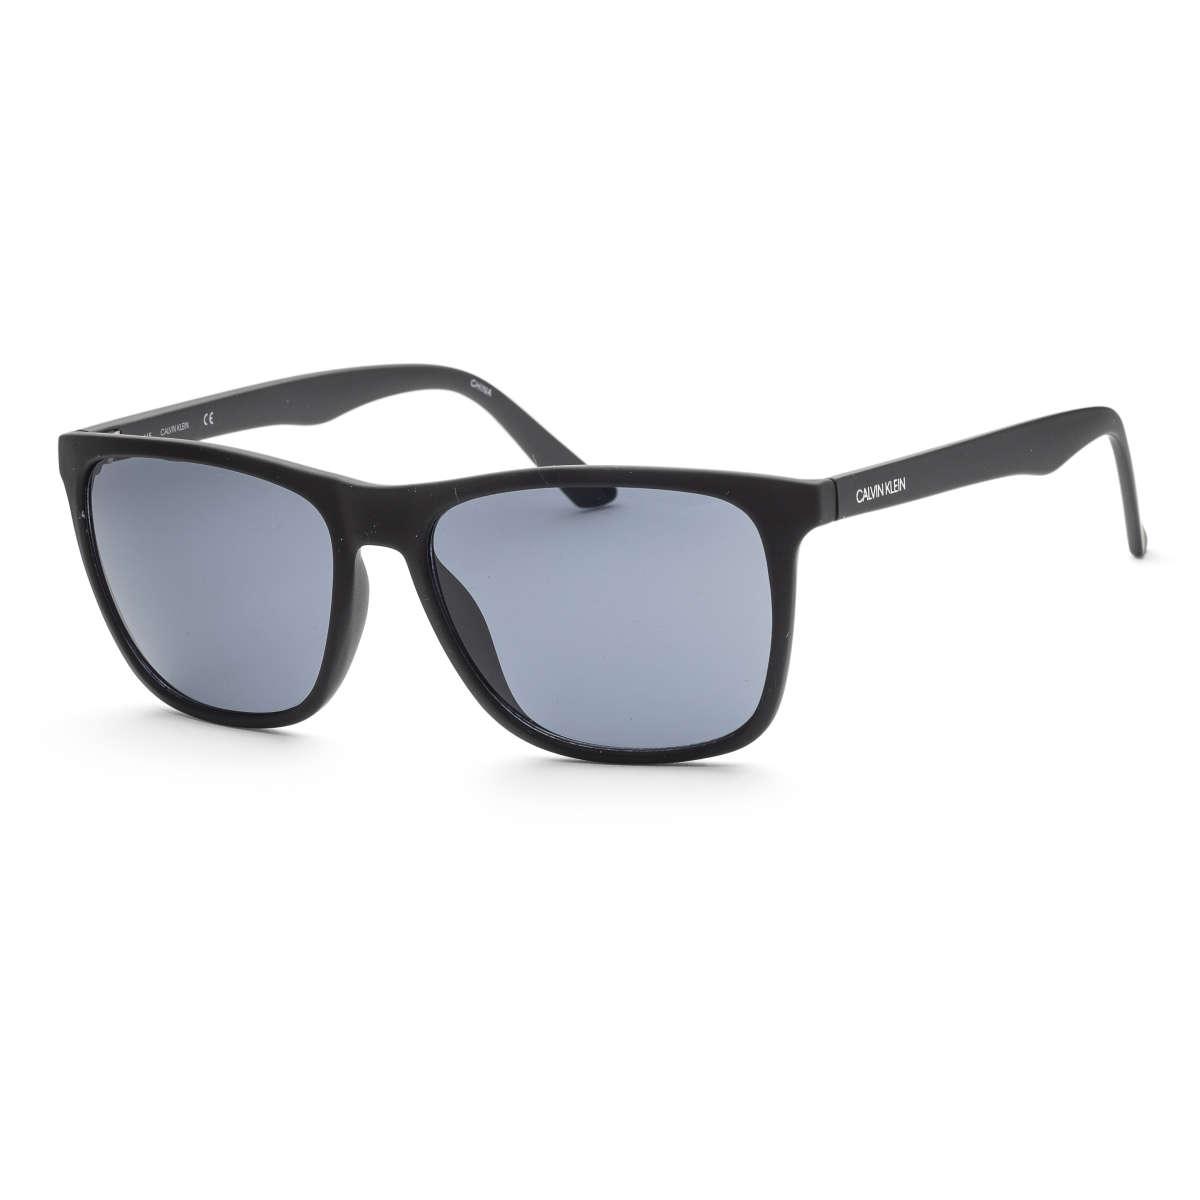 Calvin Klein Non-Polarized Fashion Sunglasses for $19.99 Shipped